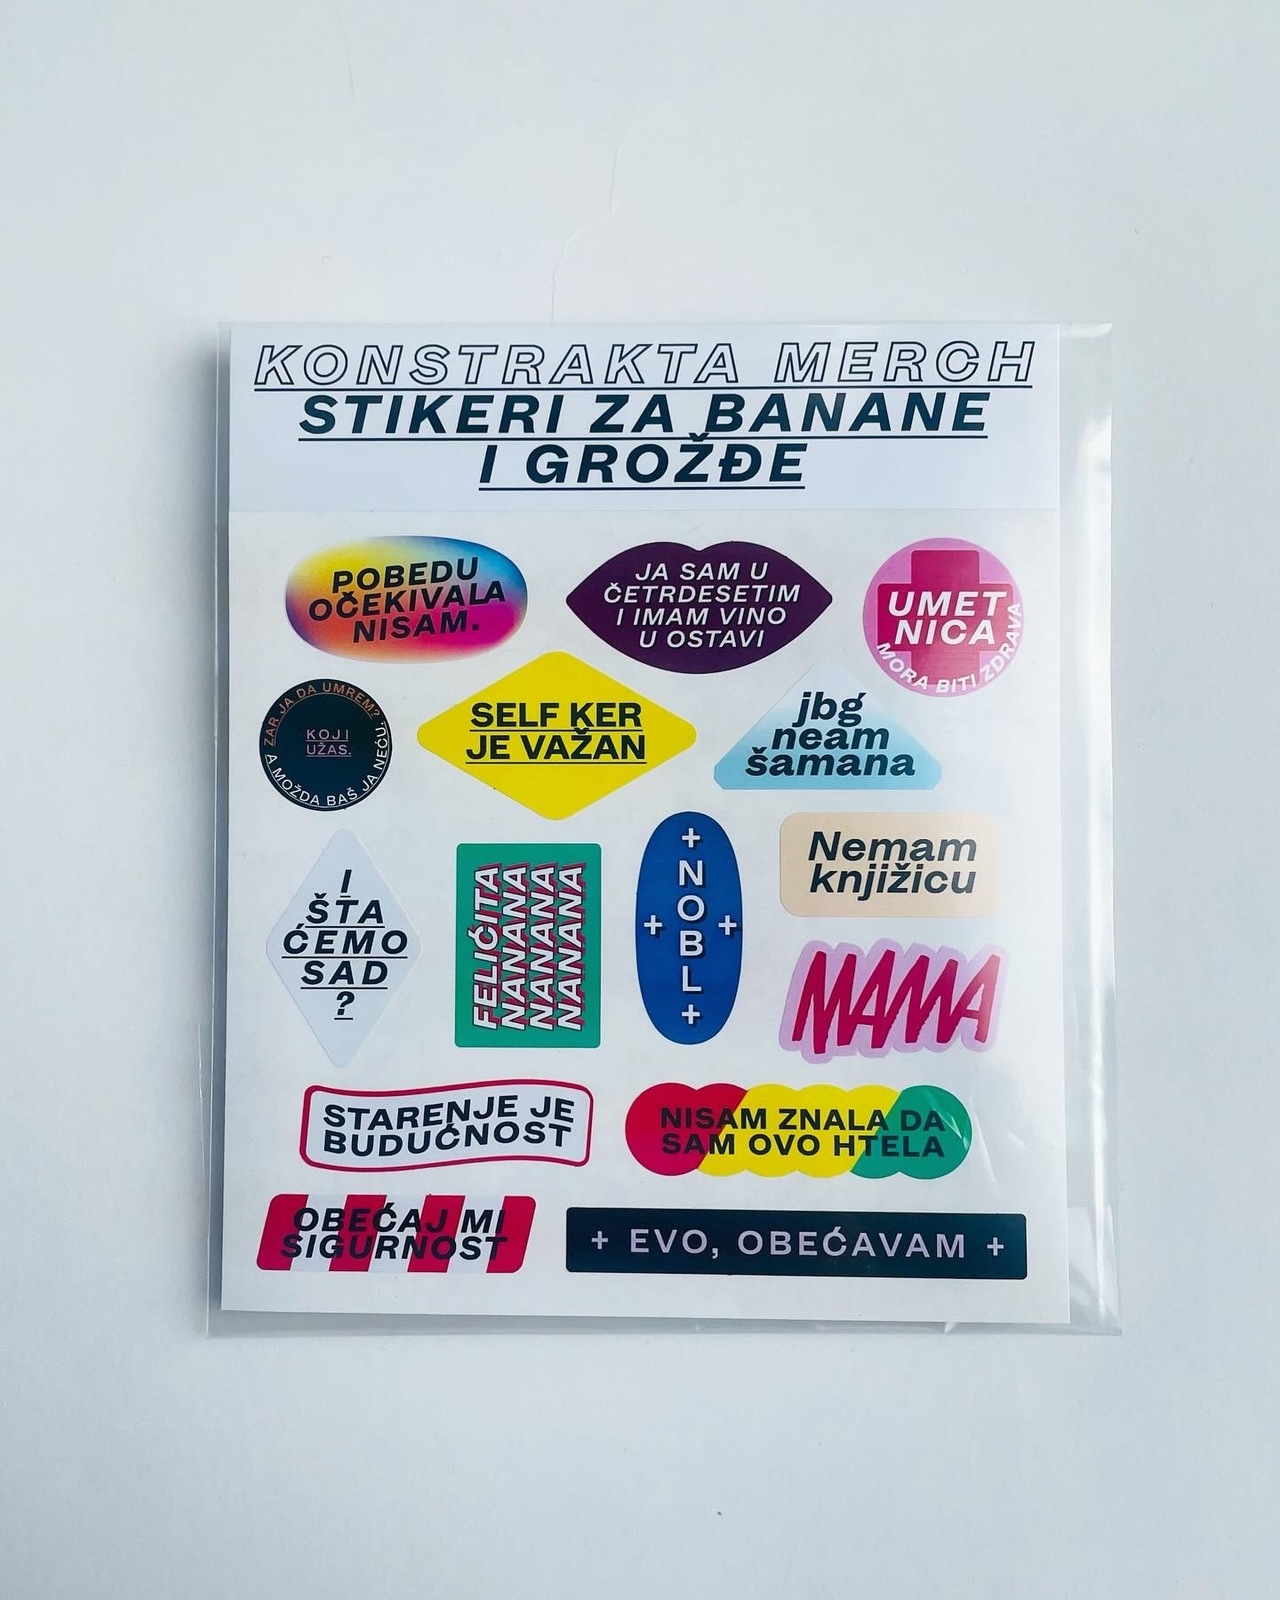 Konstrakta - Stickers for bananas and grapes